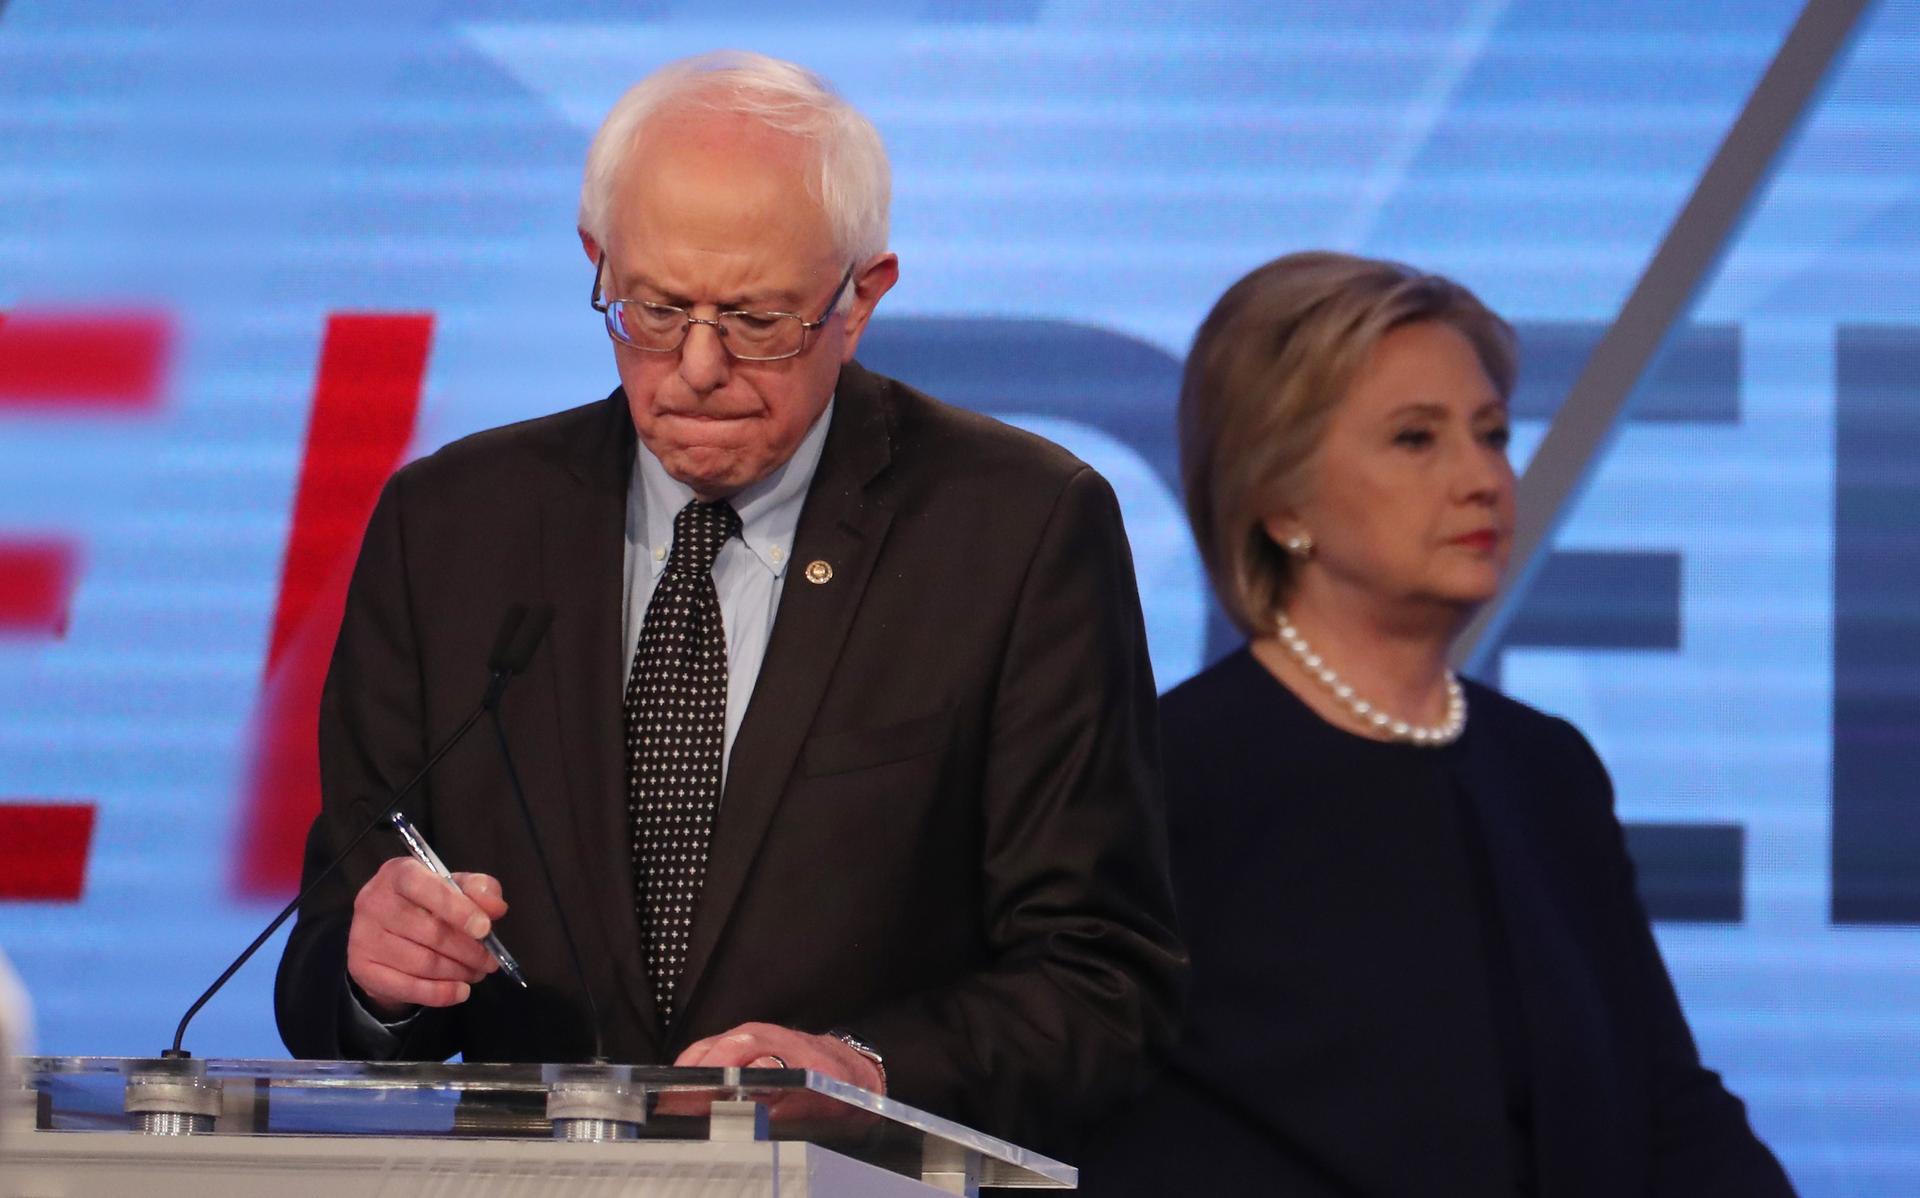 Democratic US presidential candidate Senator Bernie Sanders writes on his notes as his rival Hillary Clinton walks behind him